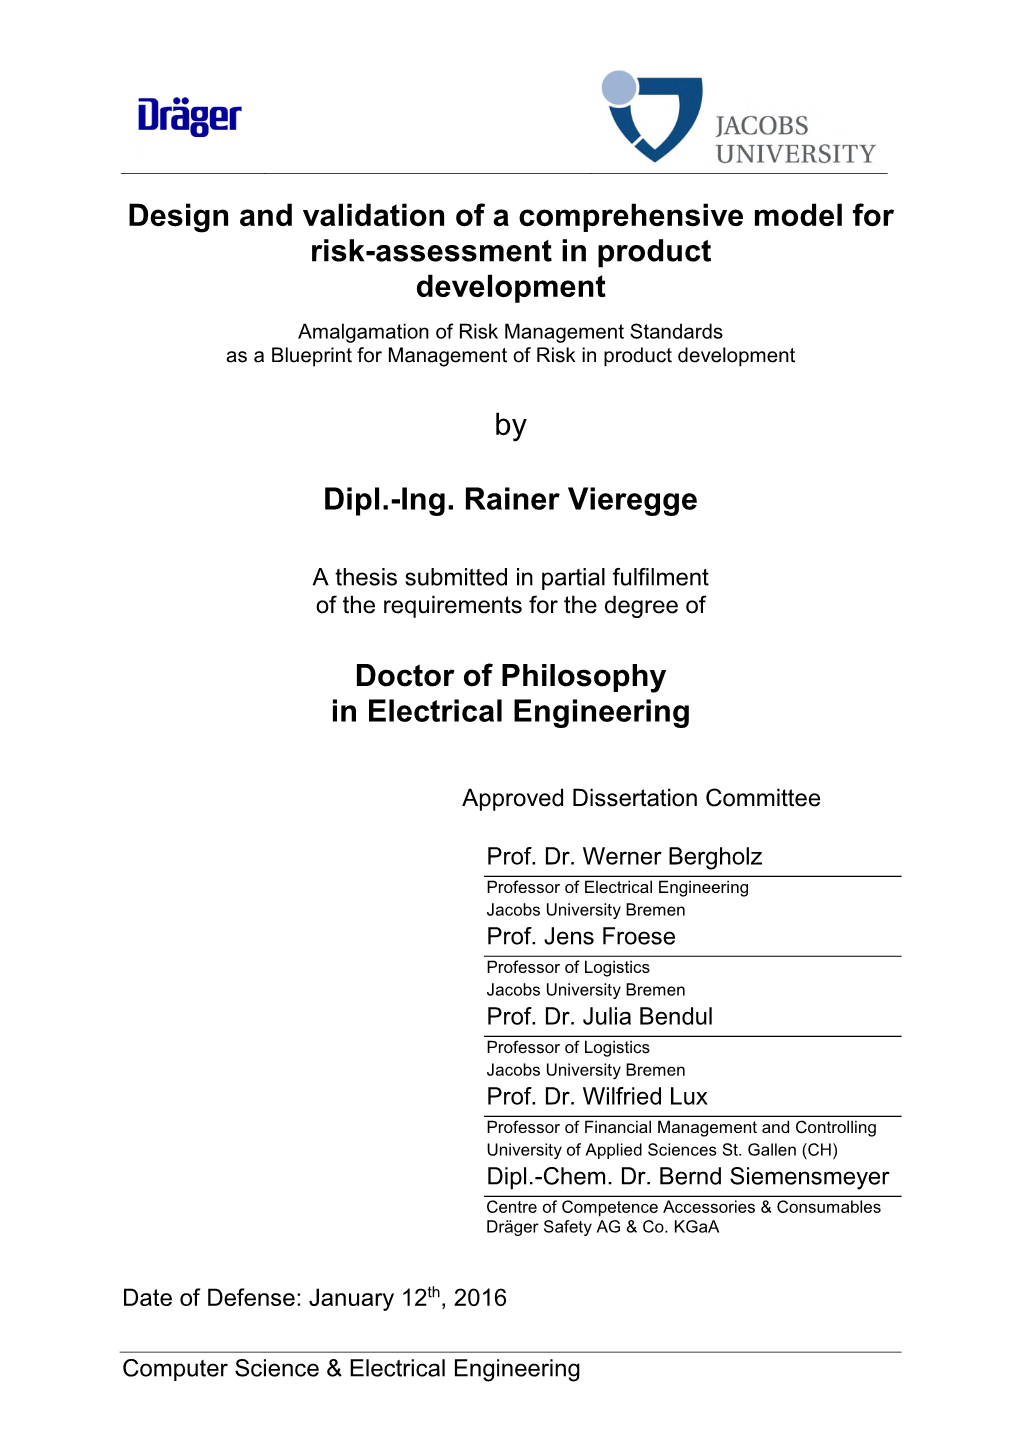 Design and Validation of a Comprehensive Model for Risk